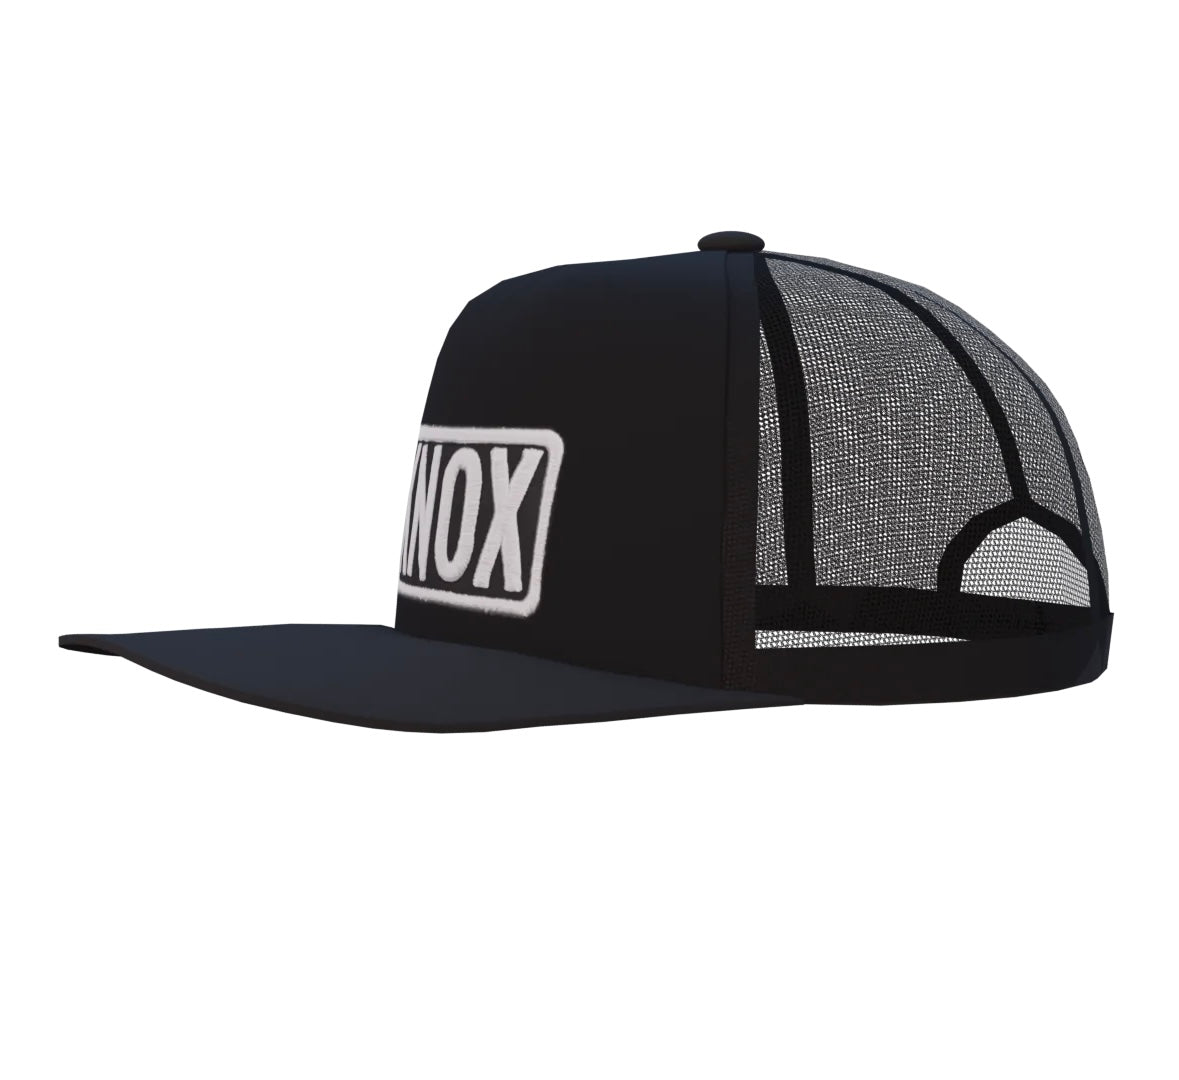 Knox R88 Snapback Trucker Hat